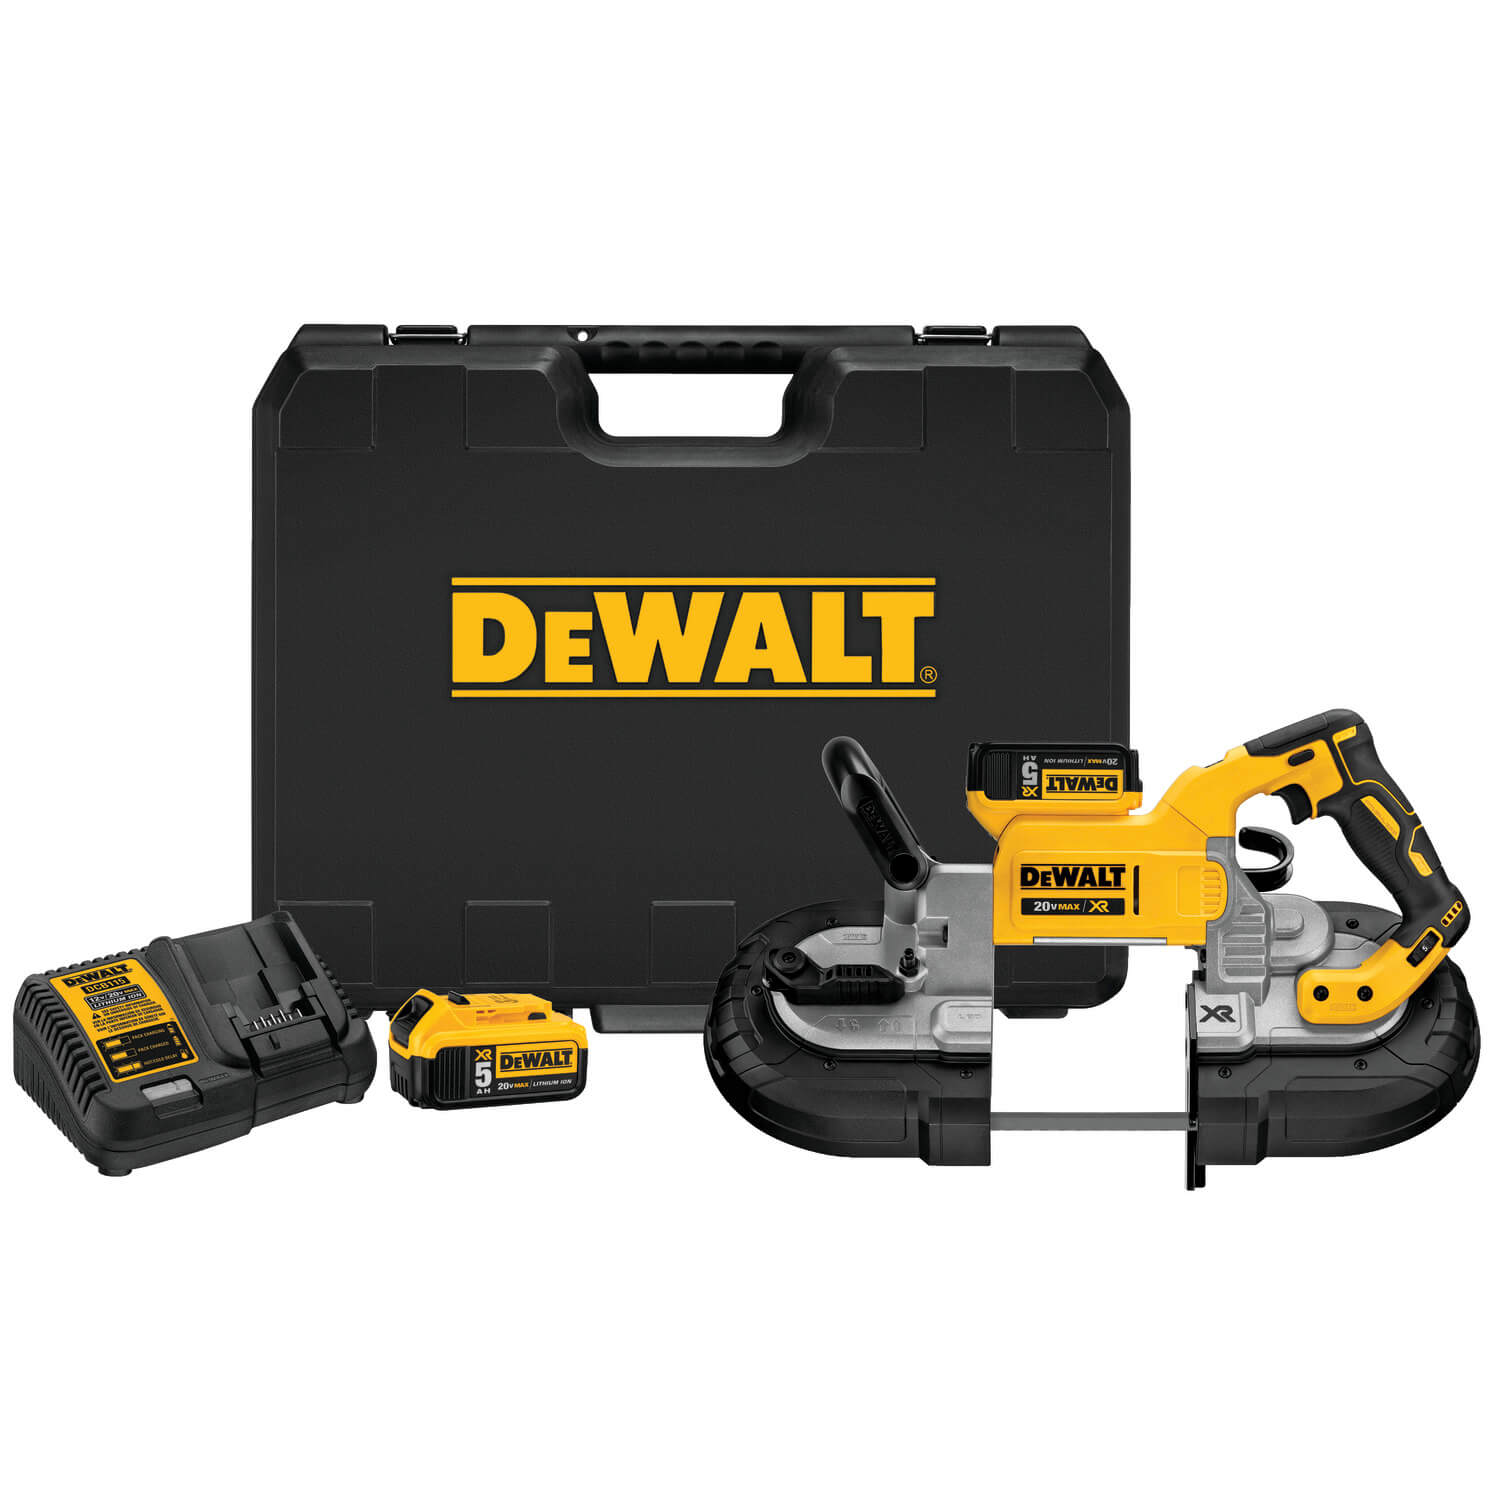 DEWALT DCS374P2 20V Max Deep Cut Band Saw Kit - wise-line-tools